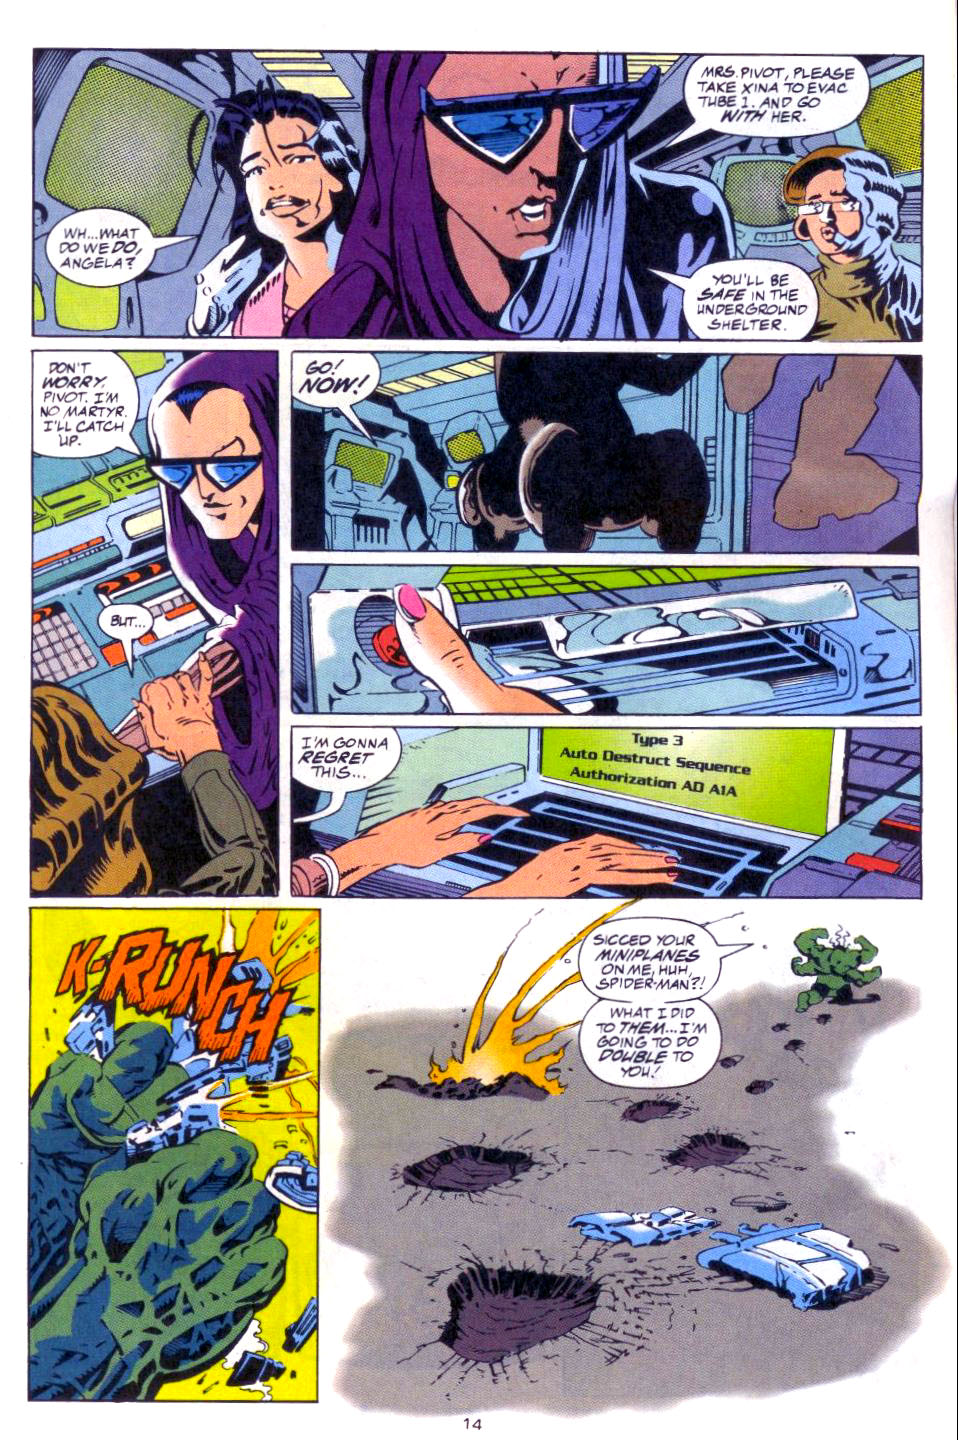 Spider-Man 2099 (1992) issue 28 - Page 11